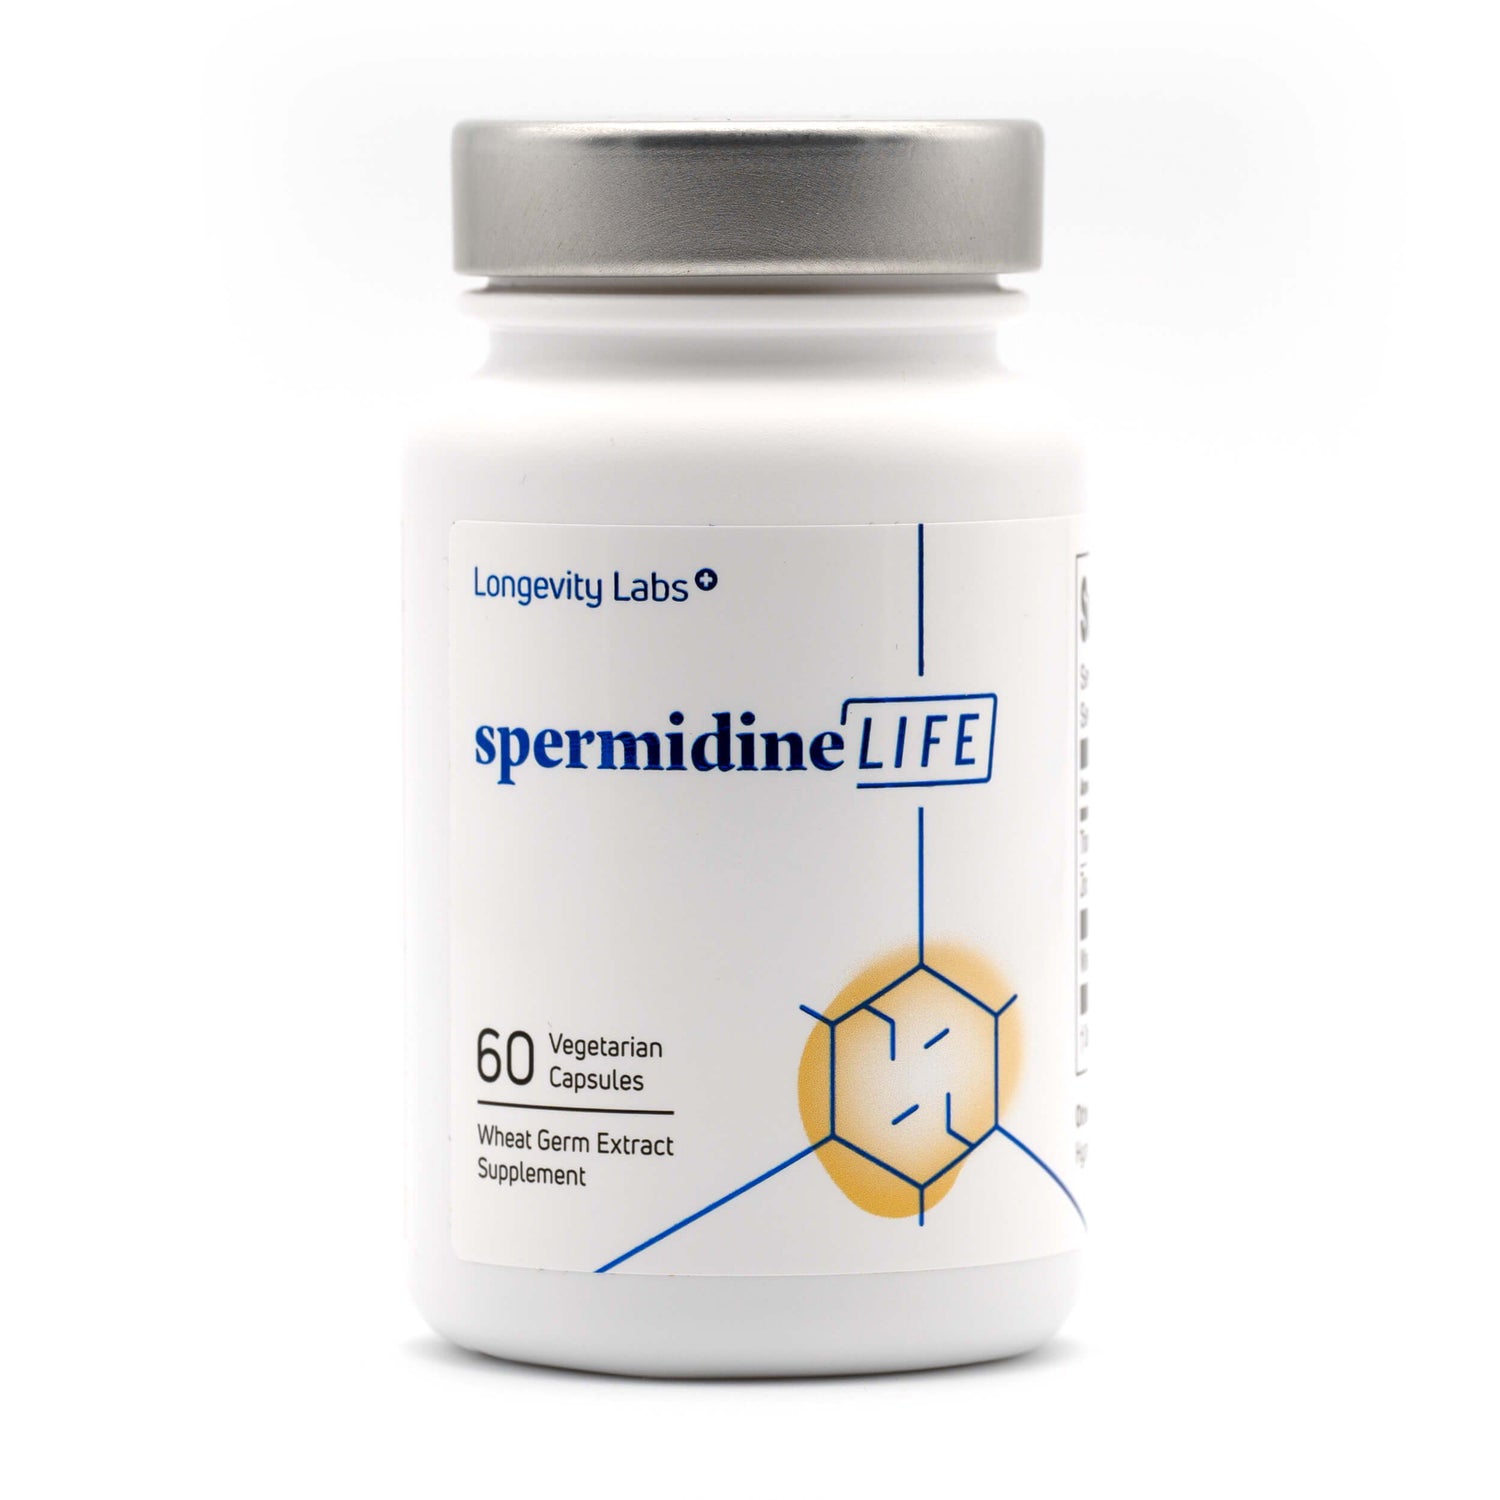 Longevity Labs Spermidine supplement pills